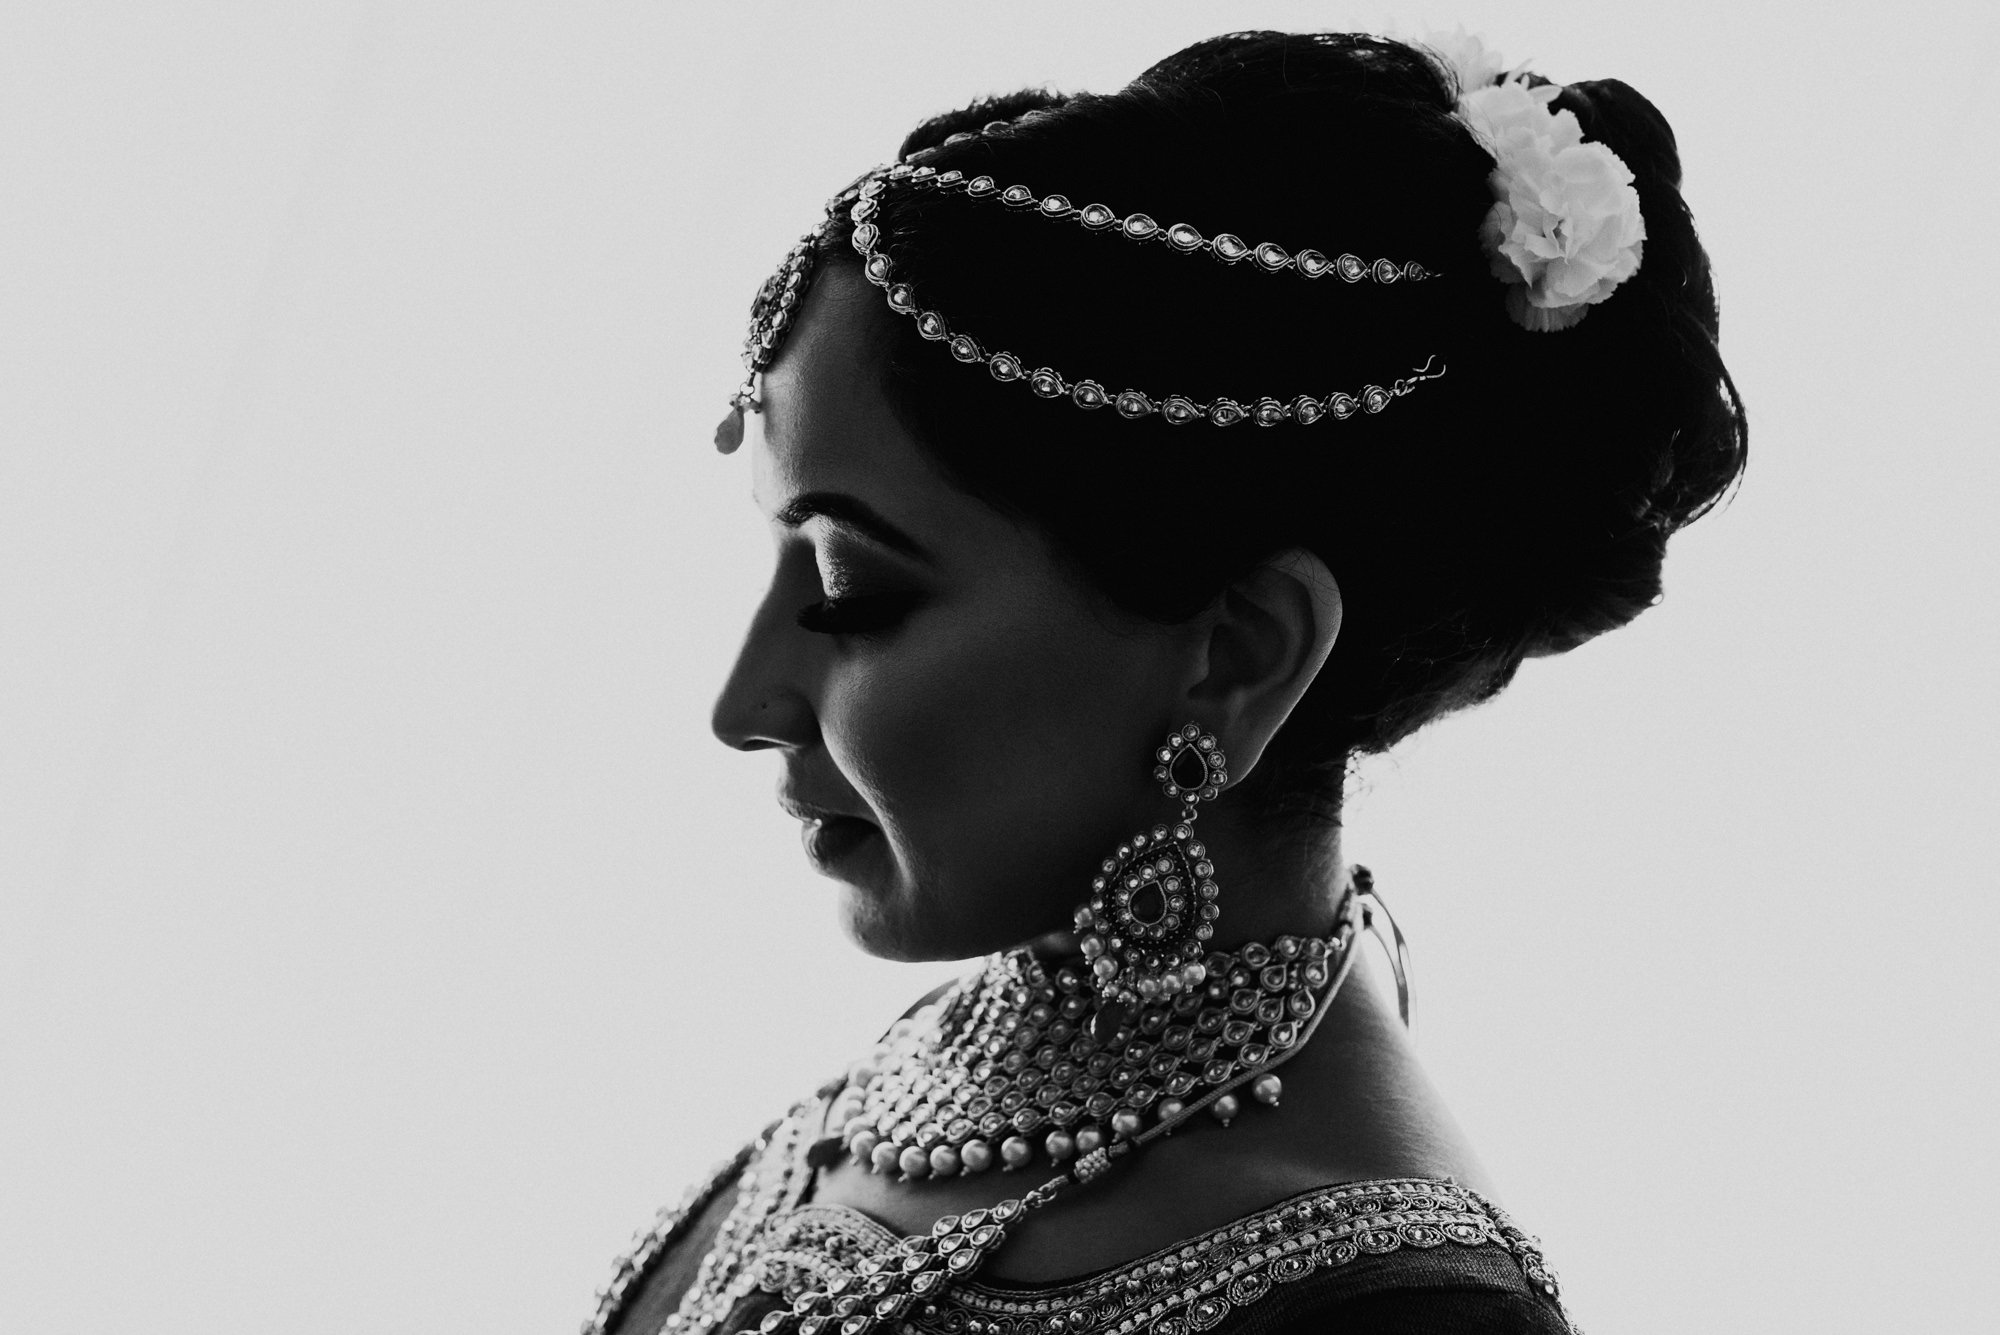 South Asian Wedding photographer in Baltimore Pictures taken by Documentary wedding photographer Mantas Kubilinskas-3.jpg